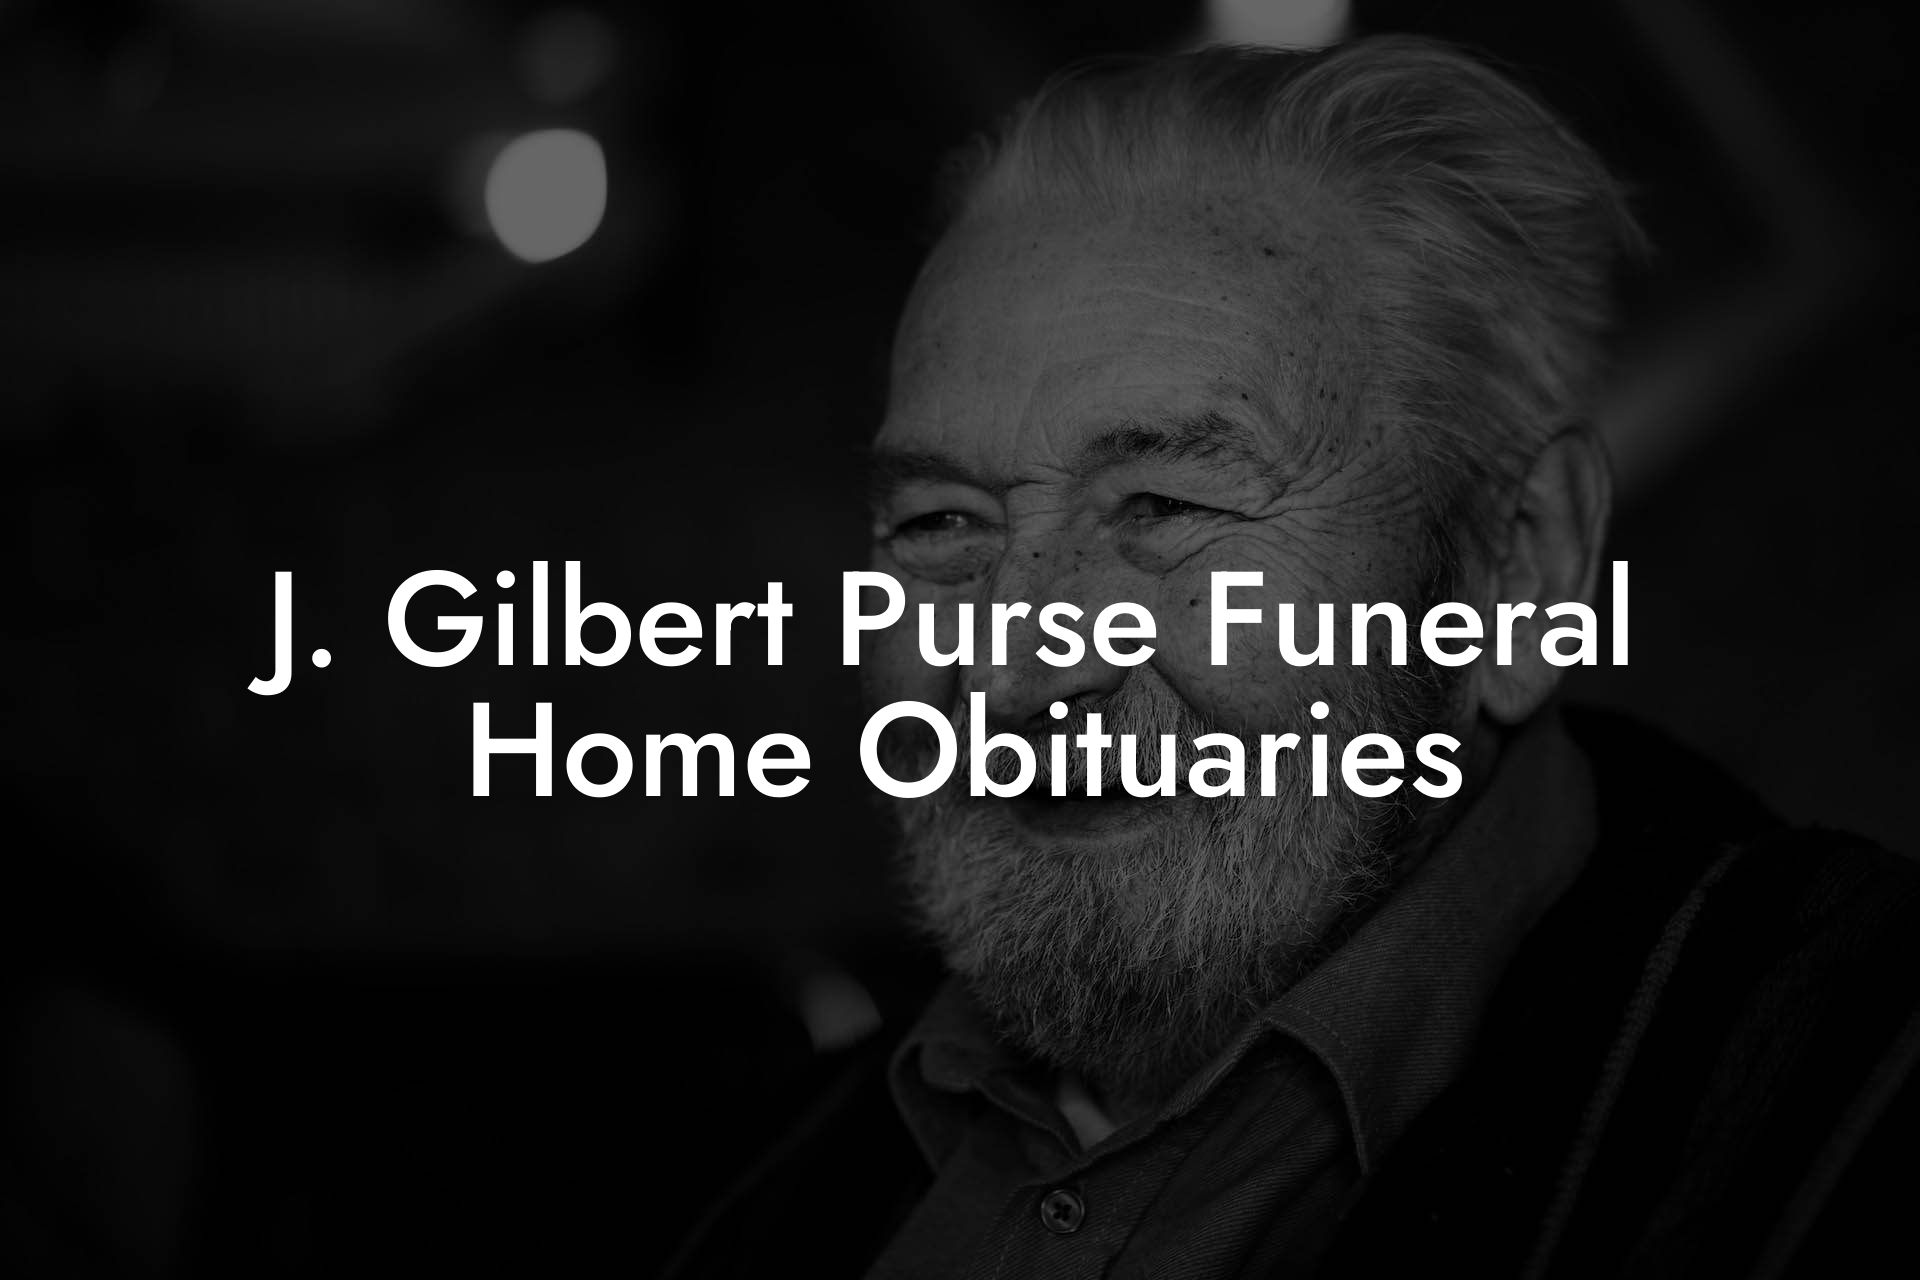 J. Gilbert Purse Funeral Home Obituaries